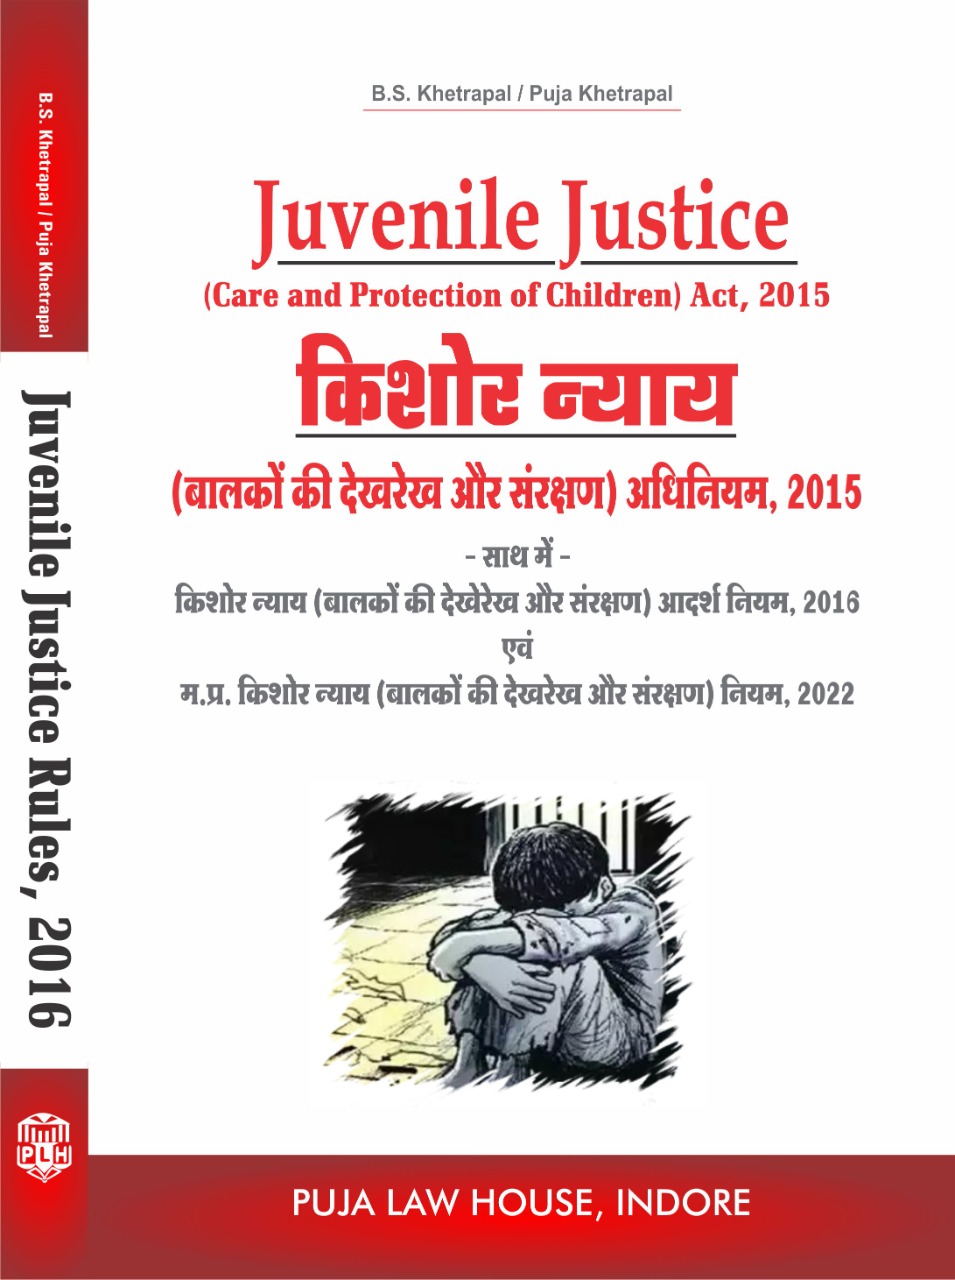 Juvenile Justice (Care and Protection of Children) Act, 2015 alongwith Juvenile Justice (Care and Protection of Children) Model Rules, 2016 and Madhya Pradesh Juvenile Justice (Care and Protection of Children) Rules, 2022 / किशोर न्याय (बालको की देख-रेख और संरक्षण) अधिनियम, 2015 साथ में  किशोर न्याय (बालको की देख-रेख और संरक्षण) आदर्श नियम, 2016 एवं किशोर न्याय (बालको की देख-रेख और संरक्षण)  नियम, 2022